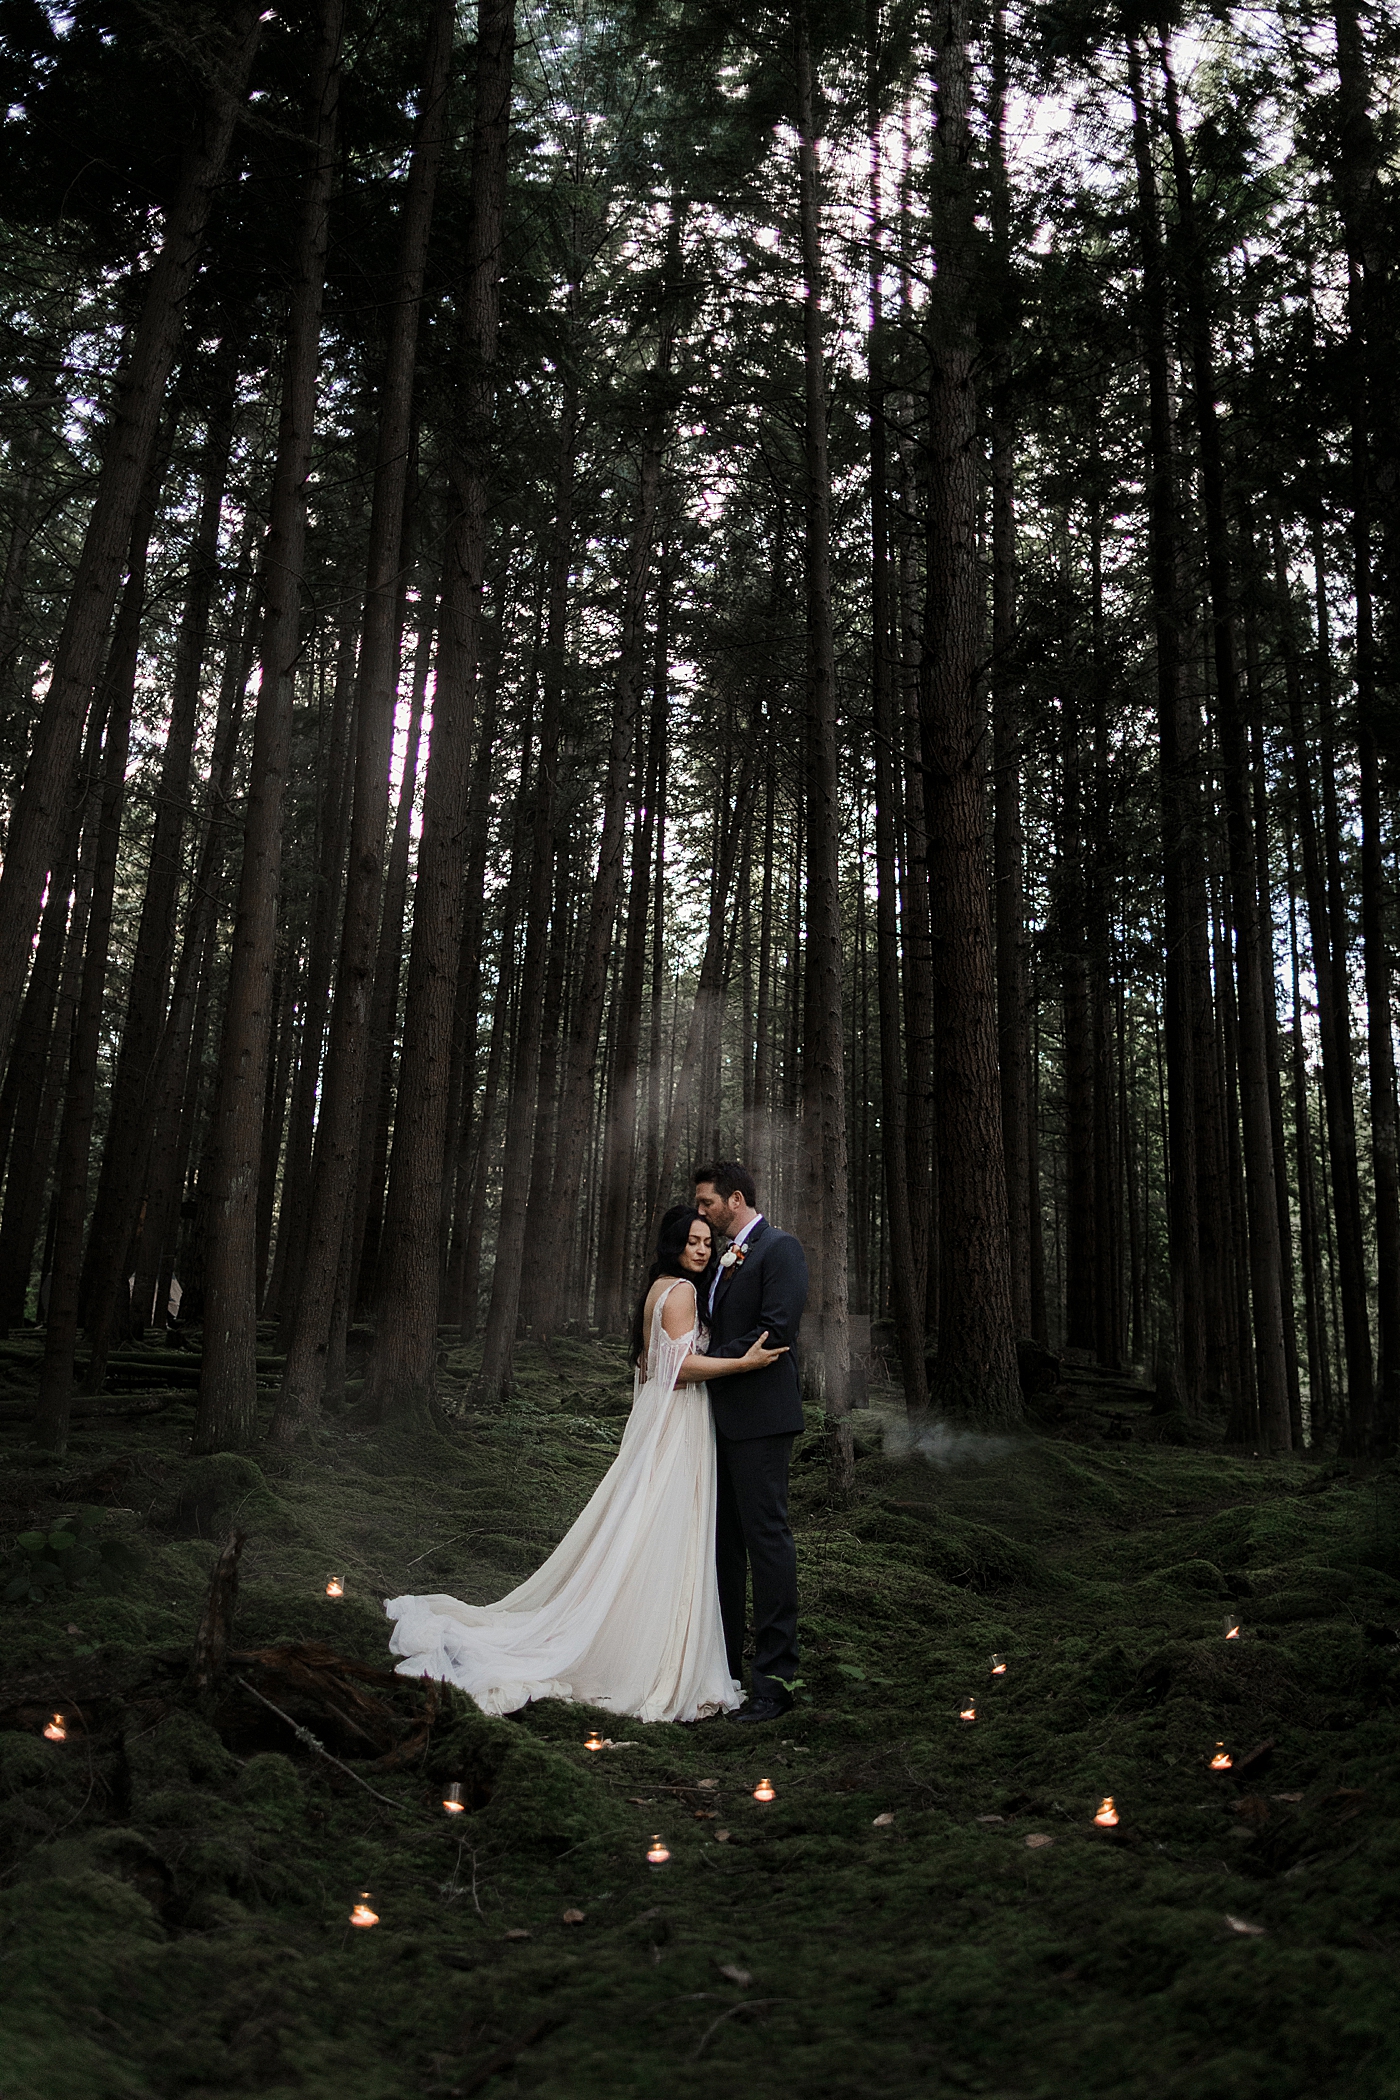 Intimate Emerald Forest Elopement | Megan Montalvo Photography